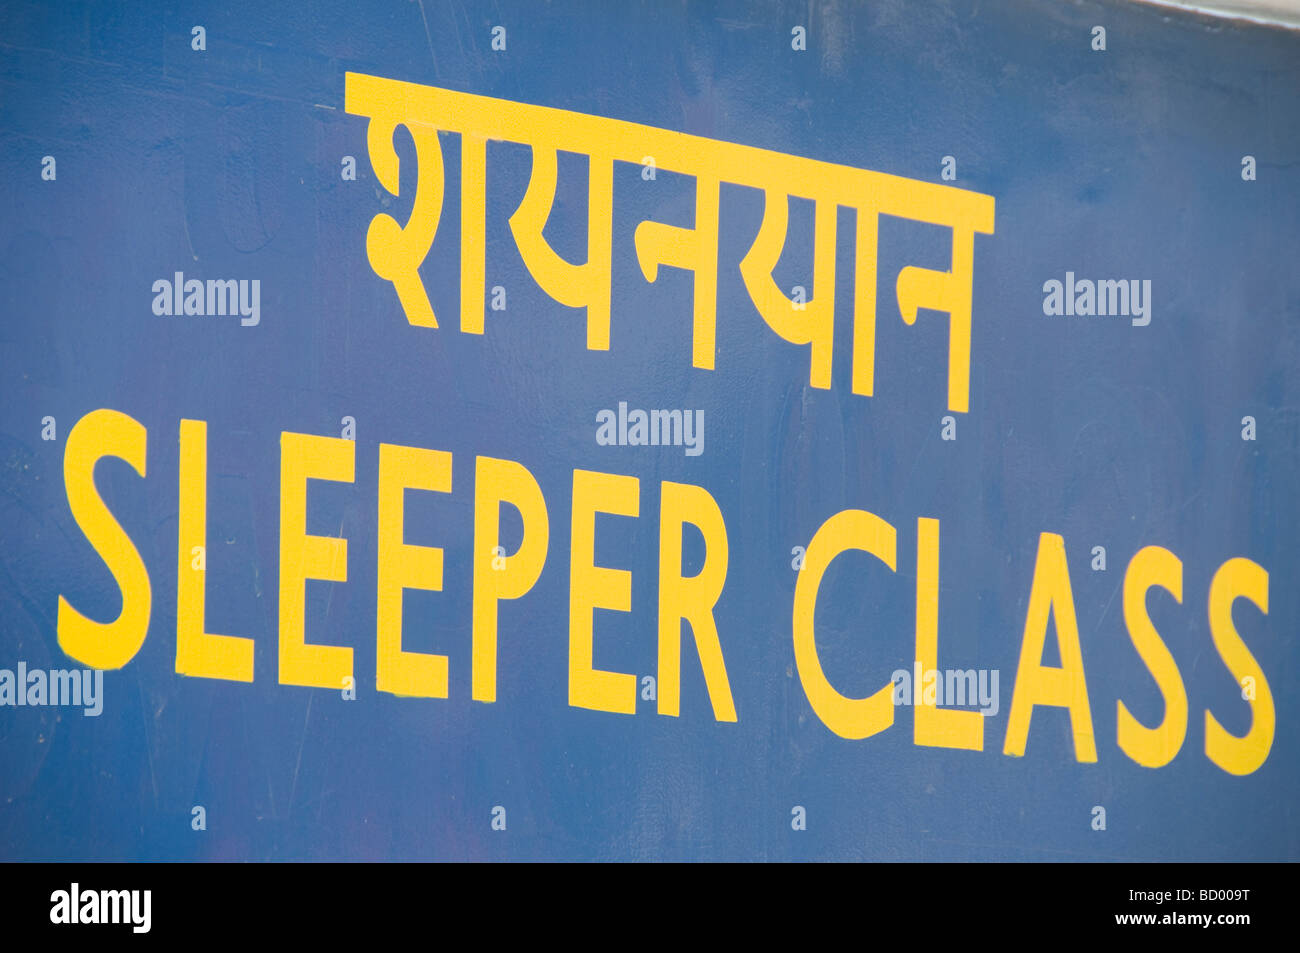 Sleeper clase en India Foto de stock